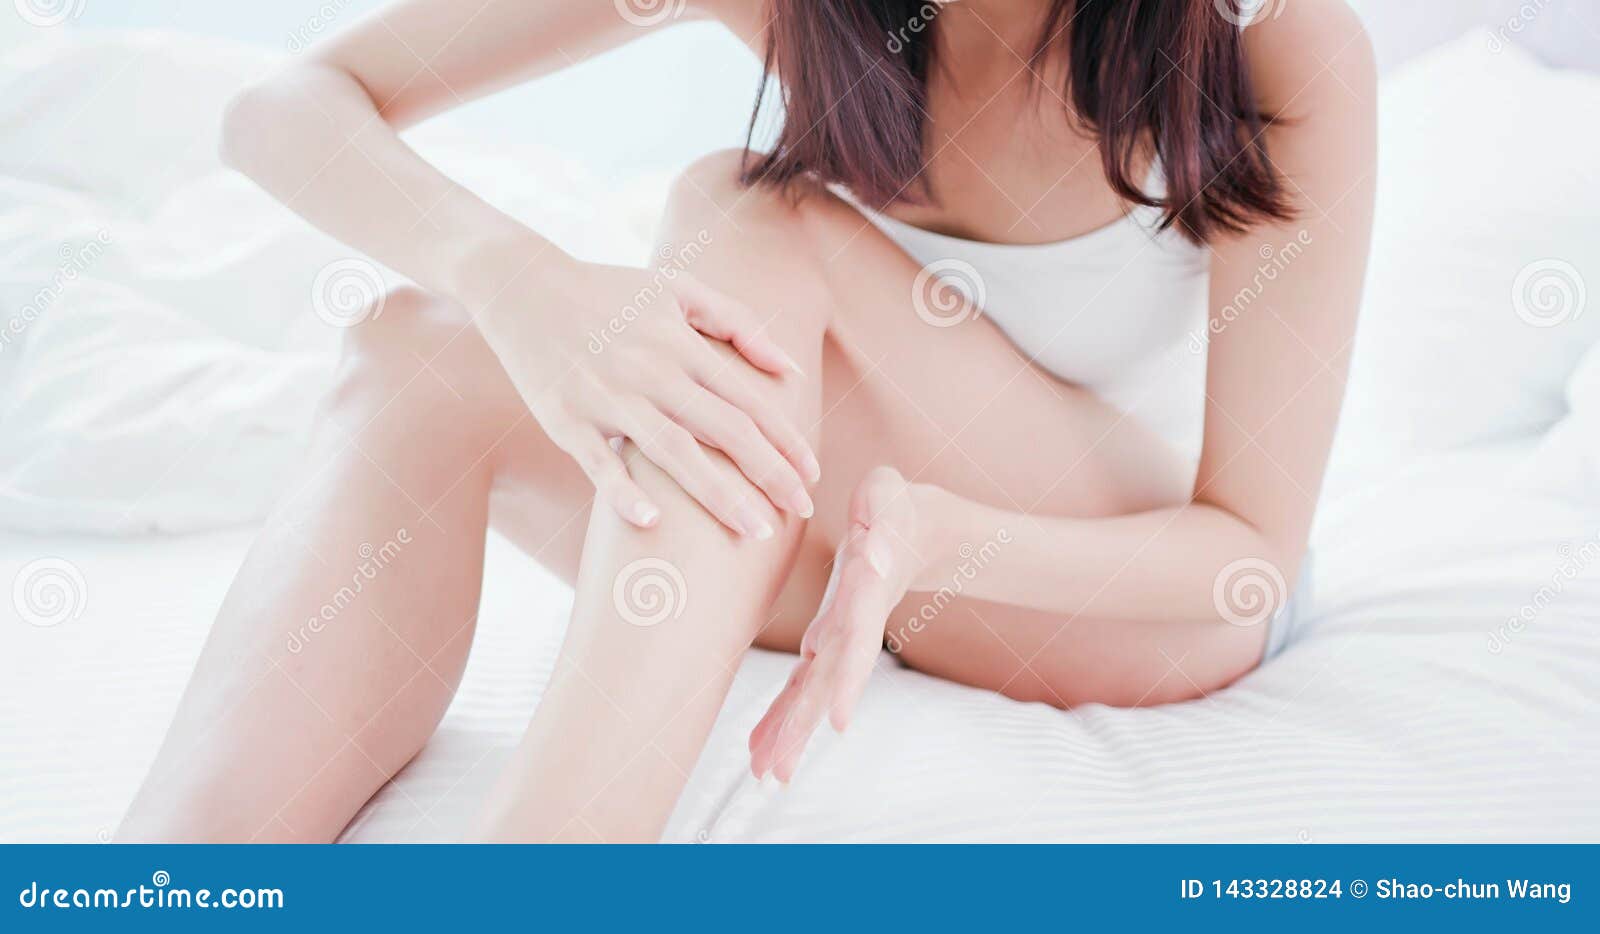 woman applying cream onto leg